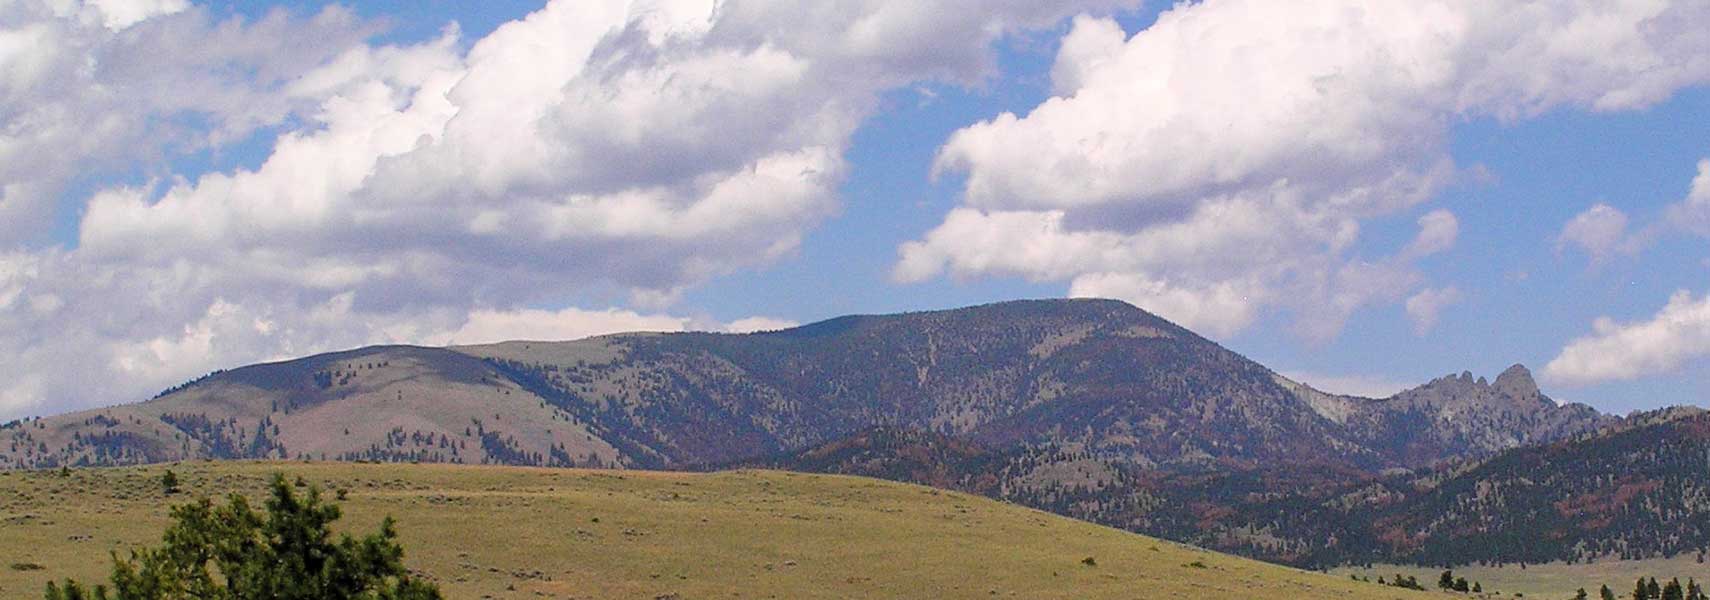 Sleeping Giant mountain formation north of Helena, Montana